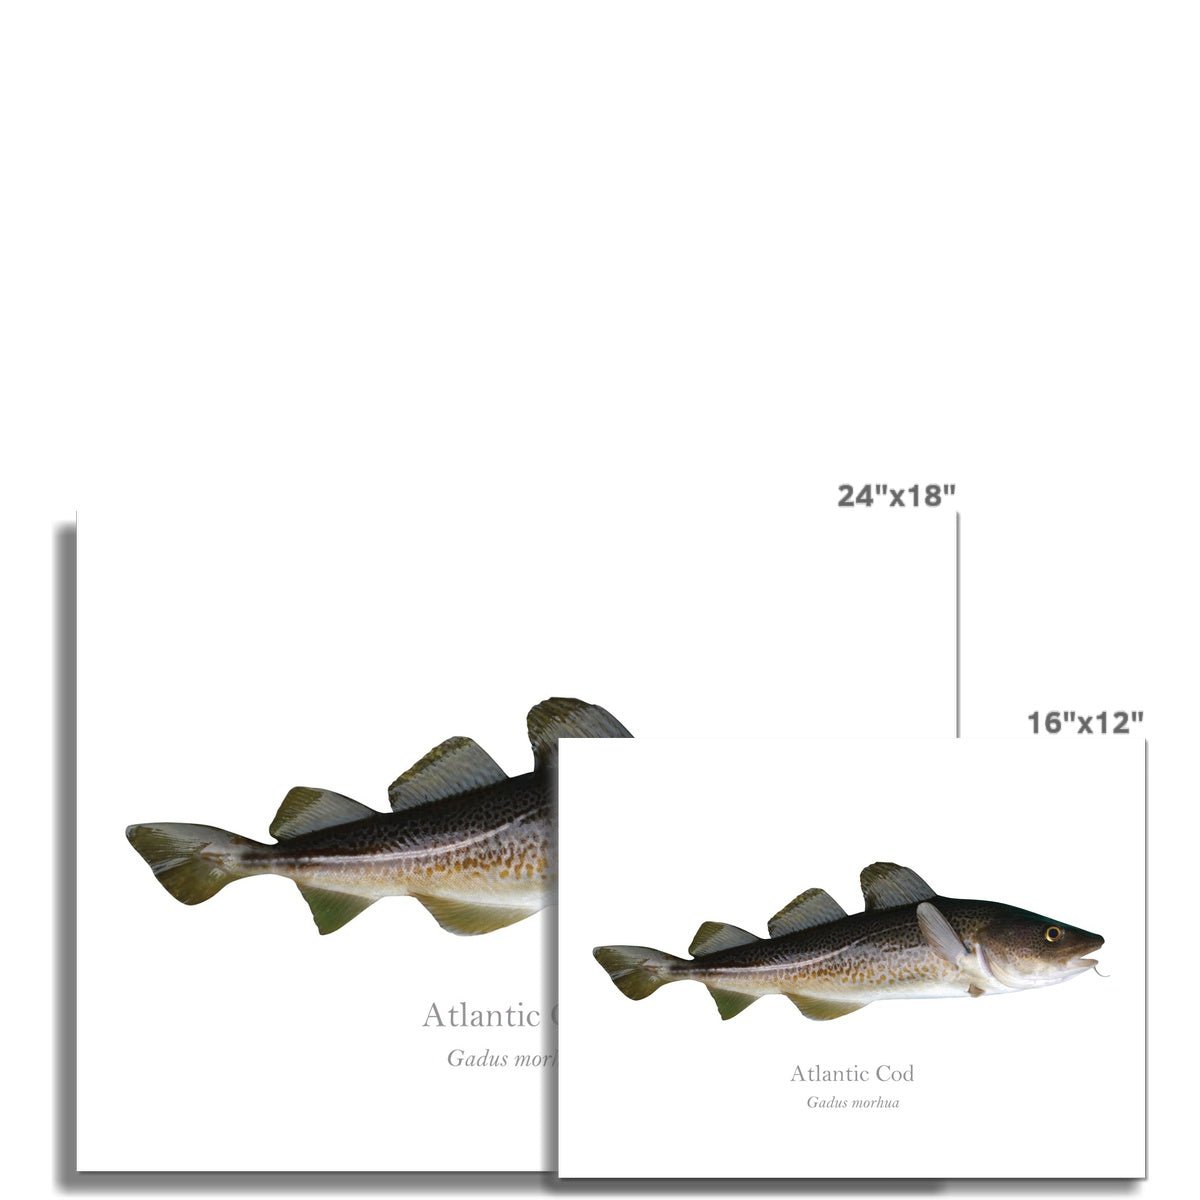 Atlantic Cod - Art Print - With Scientific Name - madfishlab.com